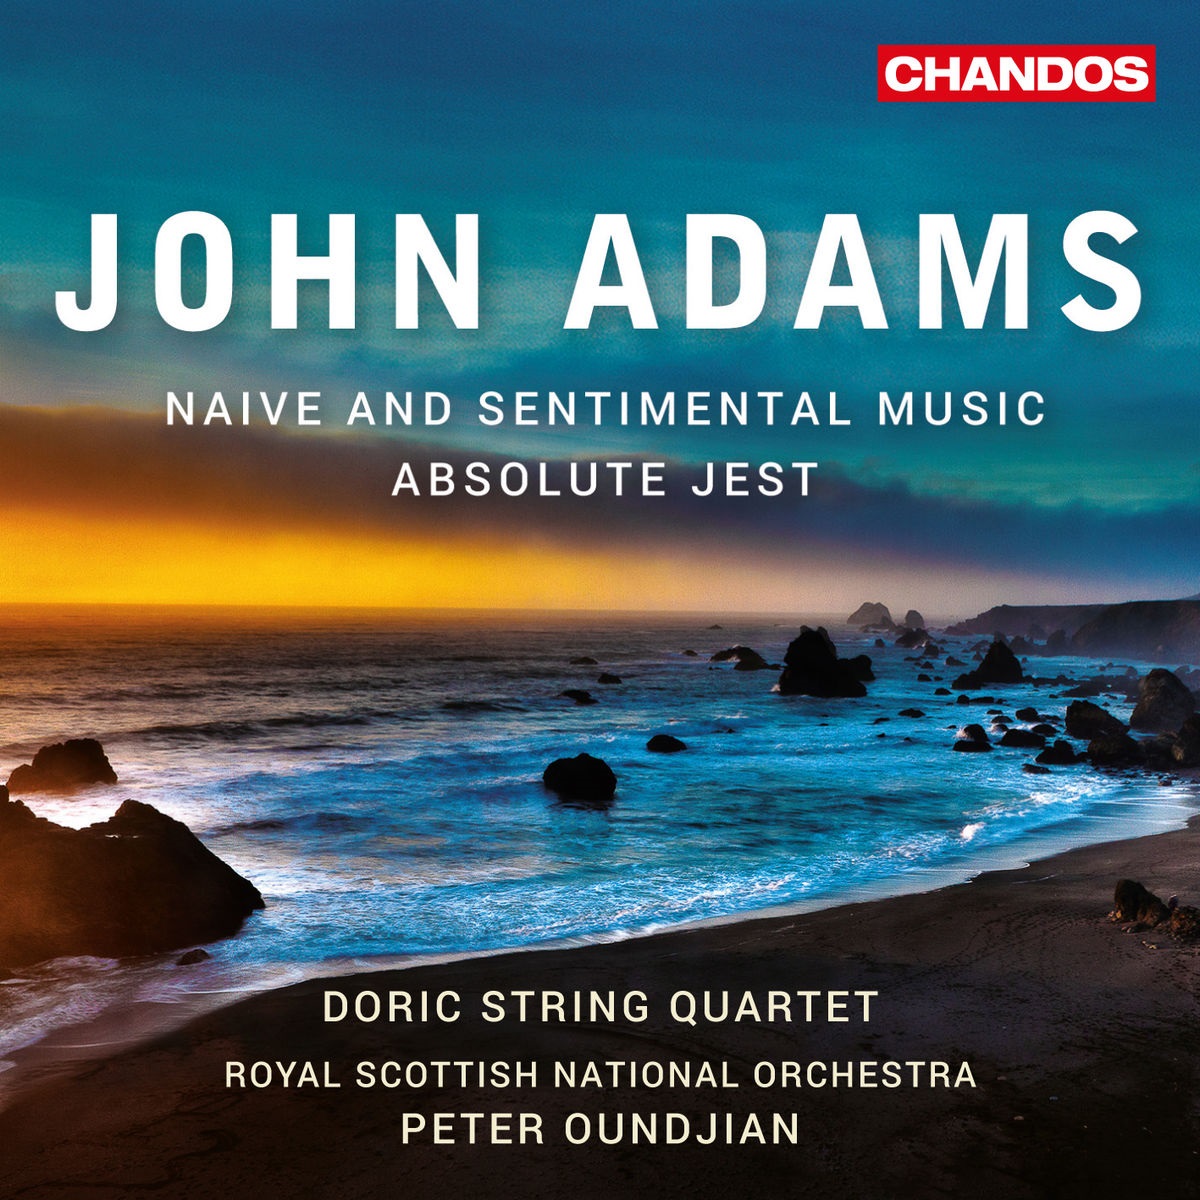 Doric String Quartet, Royal Scottish Orch., Peter Oundjian - John Adams: Naive and Sentimental Music - Absolute Jest (2018) [FLAC 24bit/96kHz]